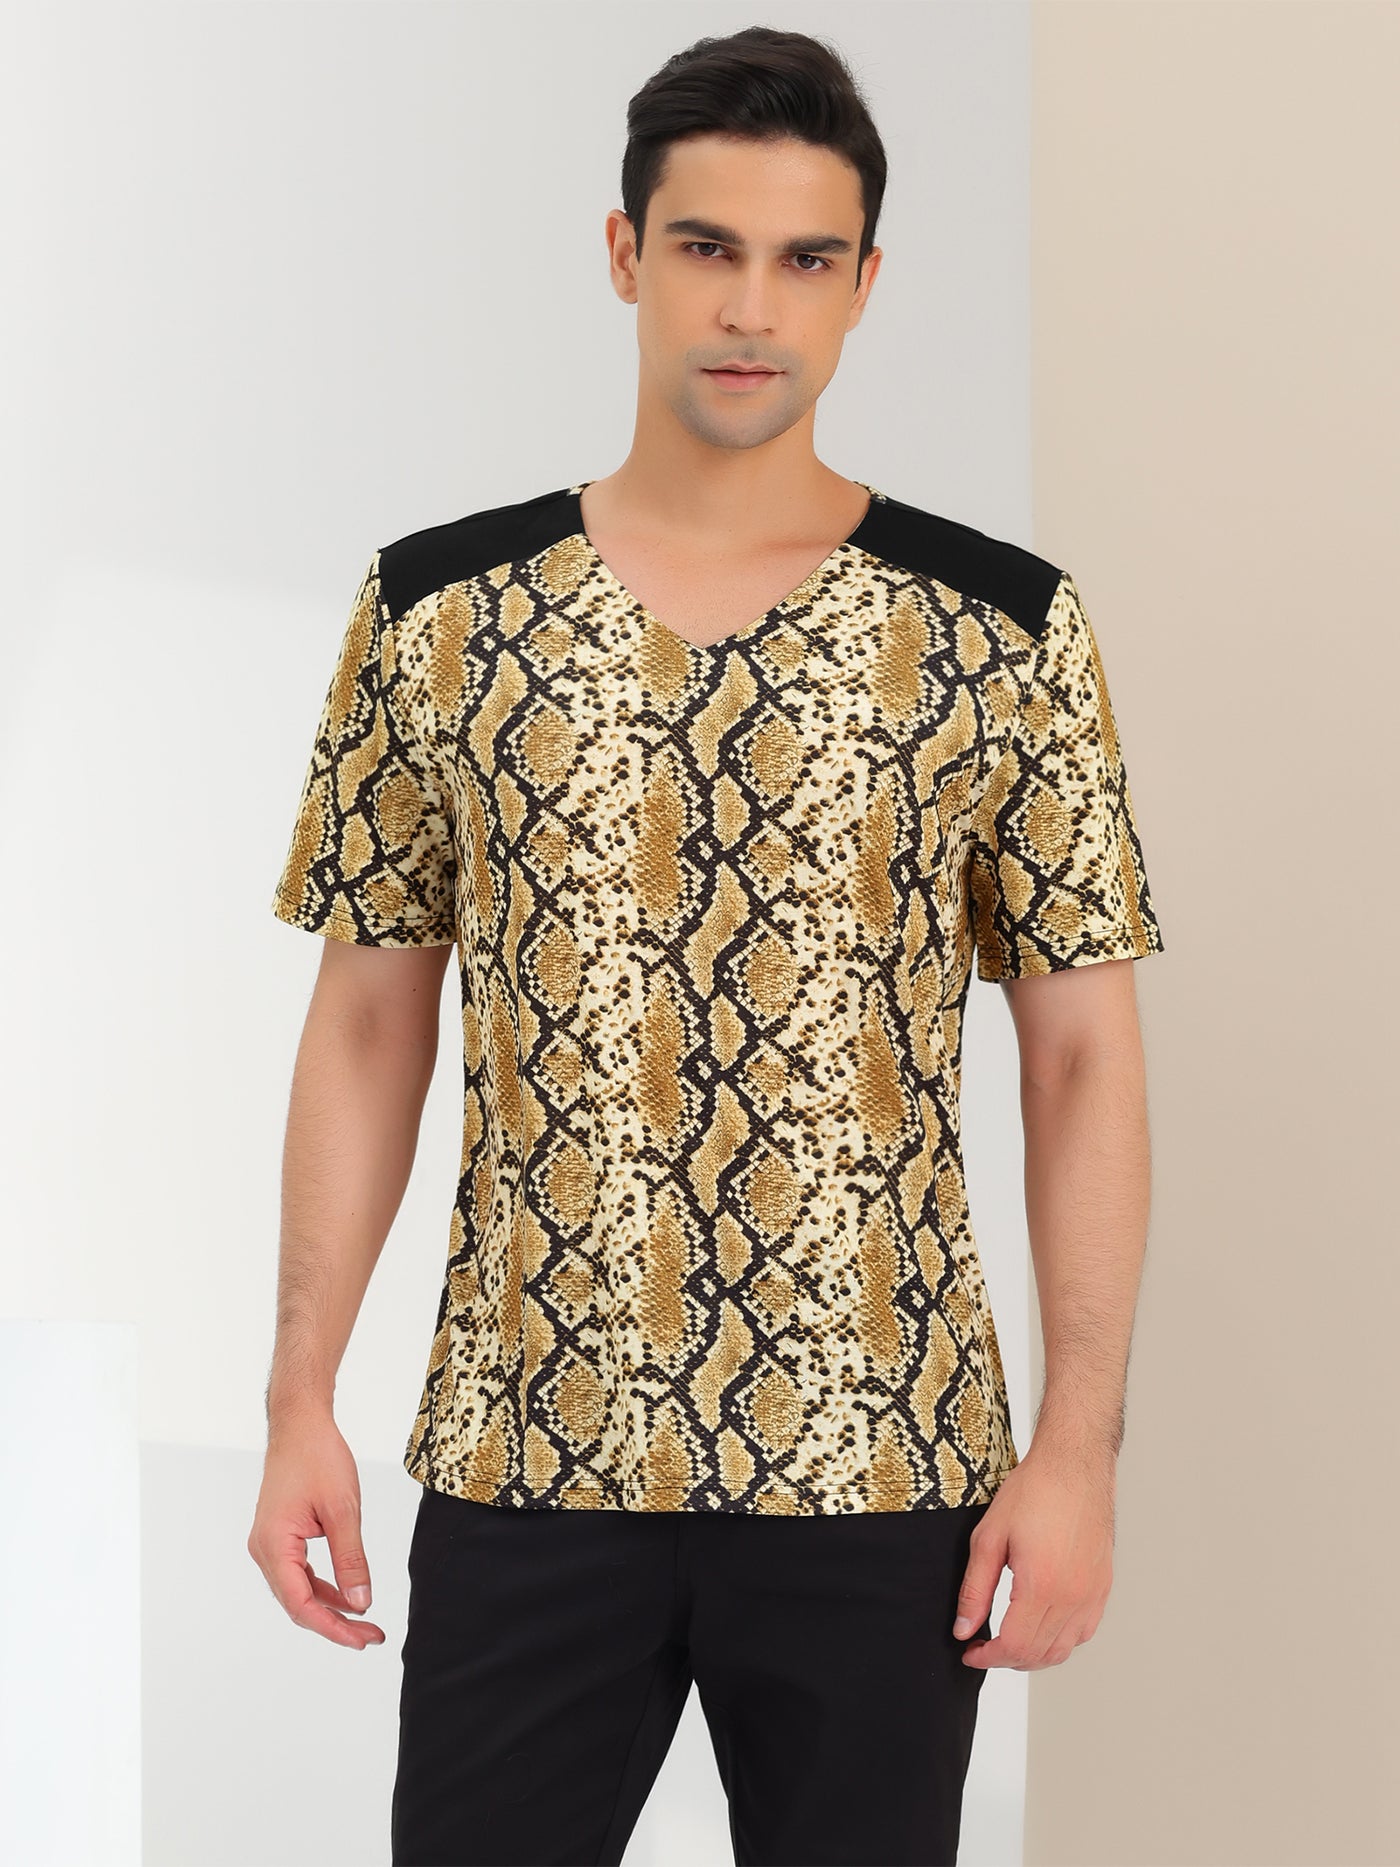 Bublédon Leopard Print V Neck PU Panel Short Sleeve T-shirts